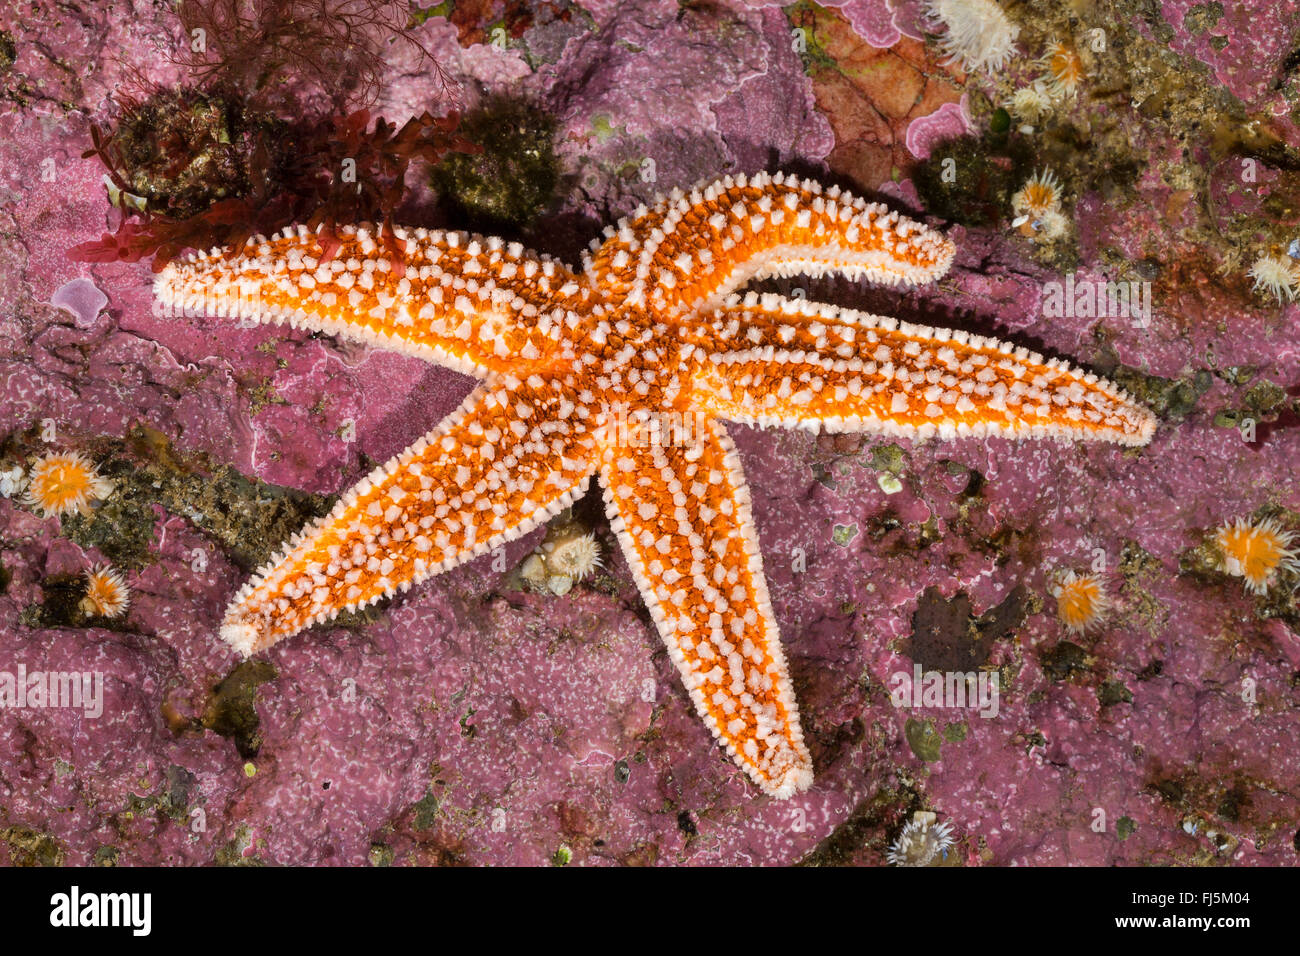 common starfish, common European seastar (Asterias rubens), at reef Stock Photo